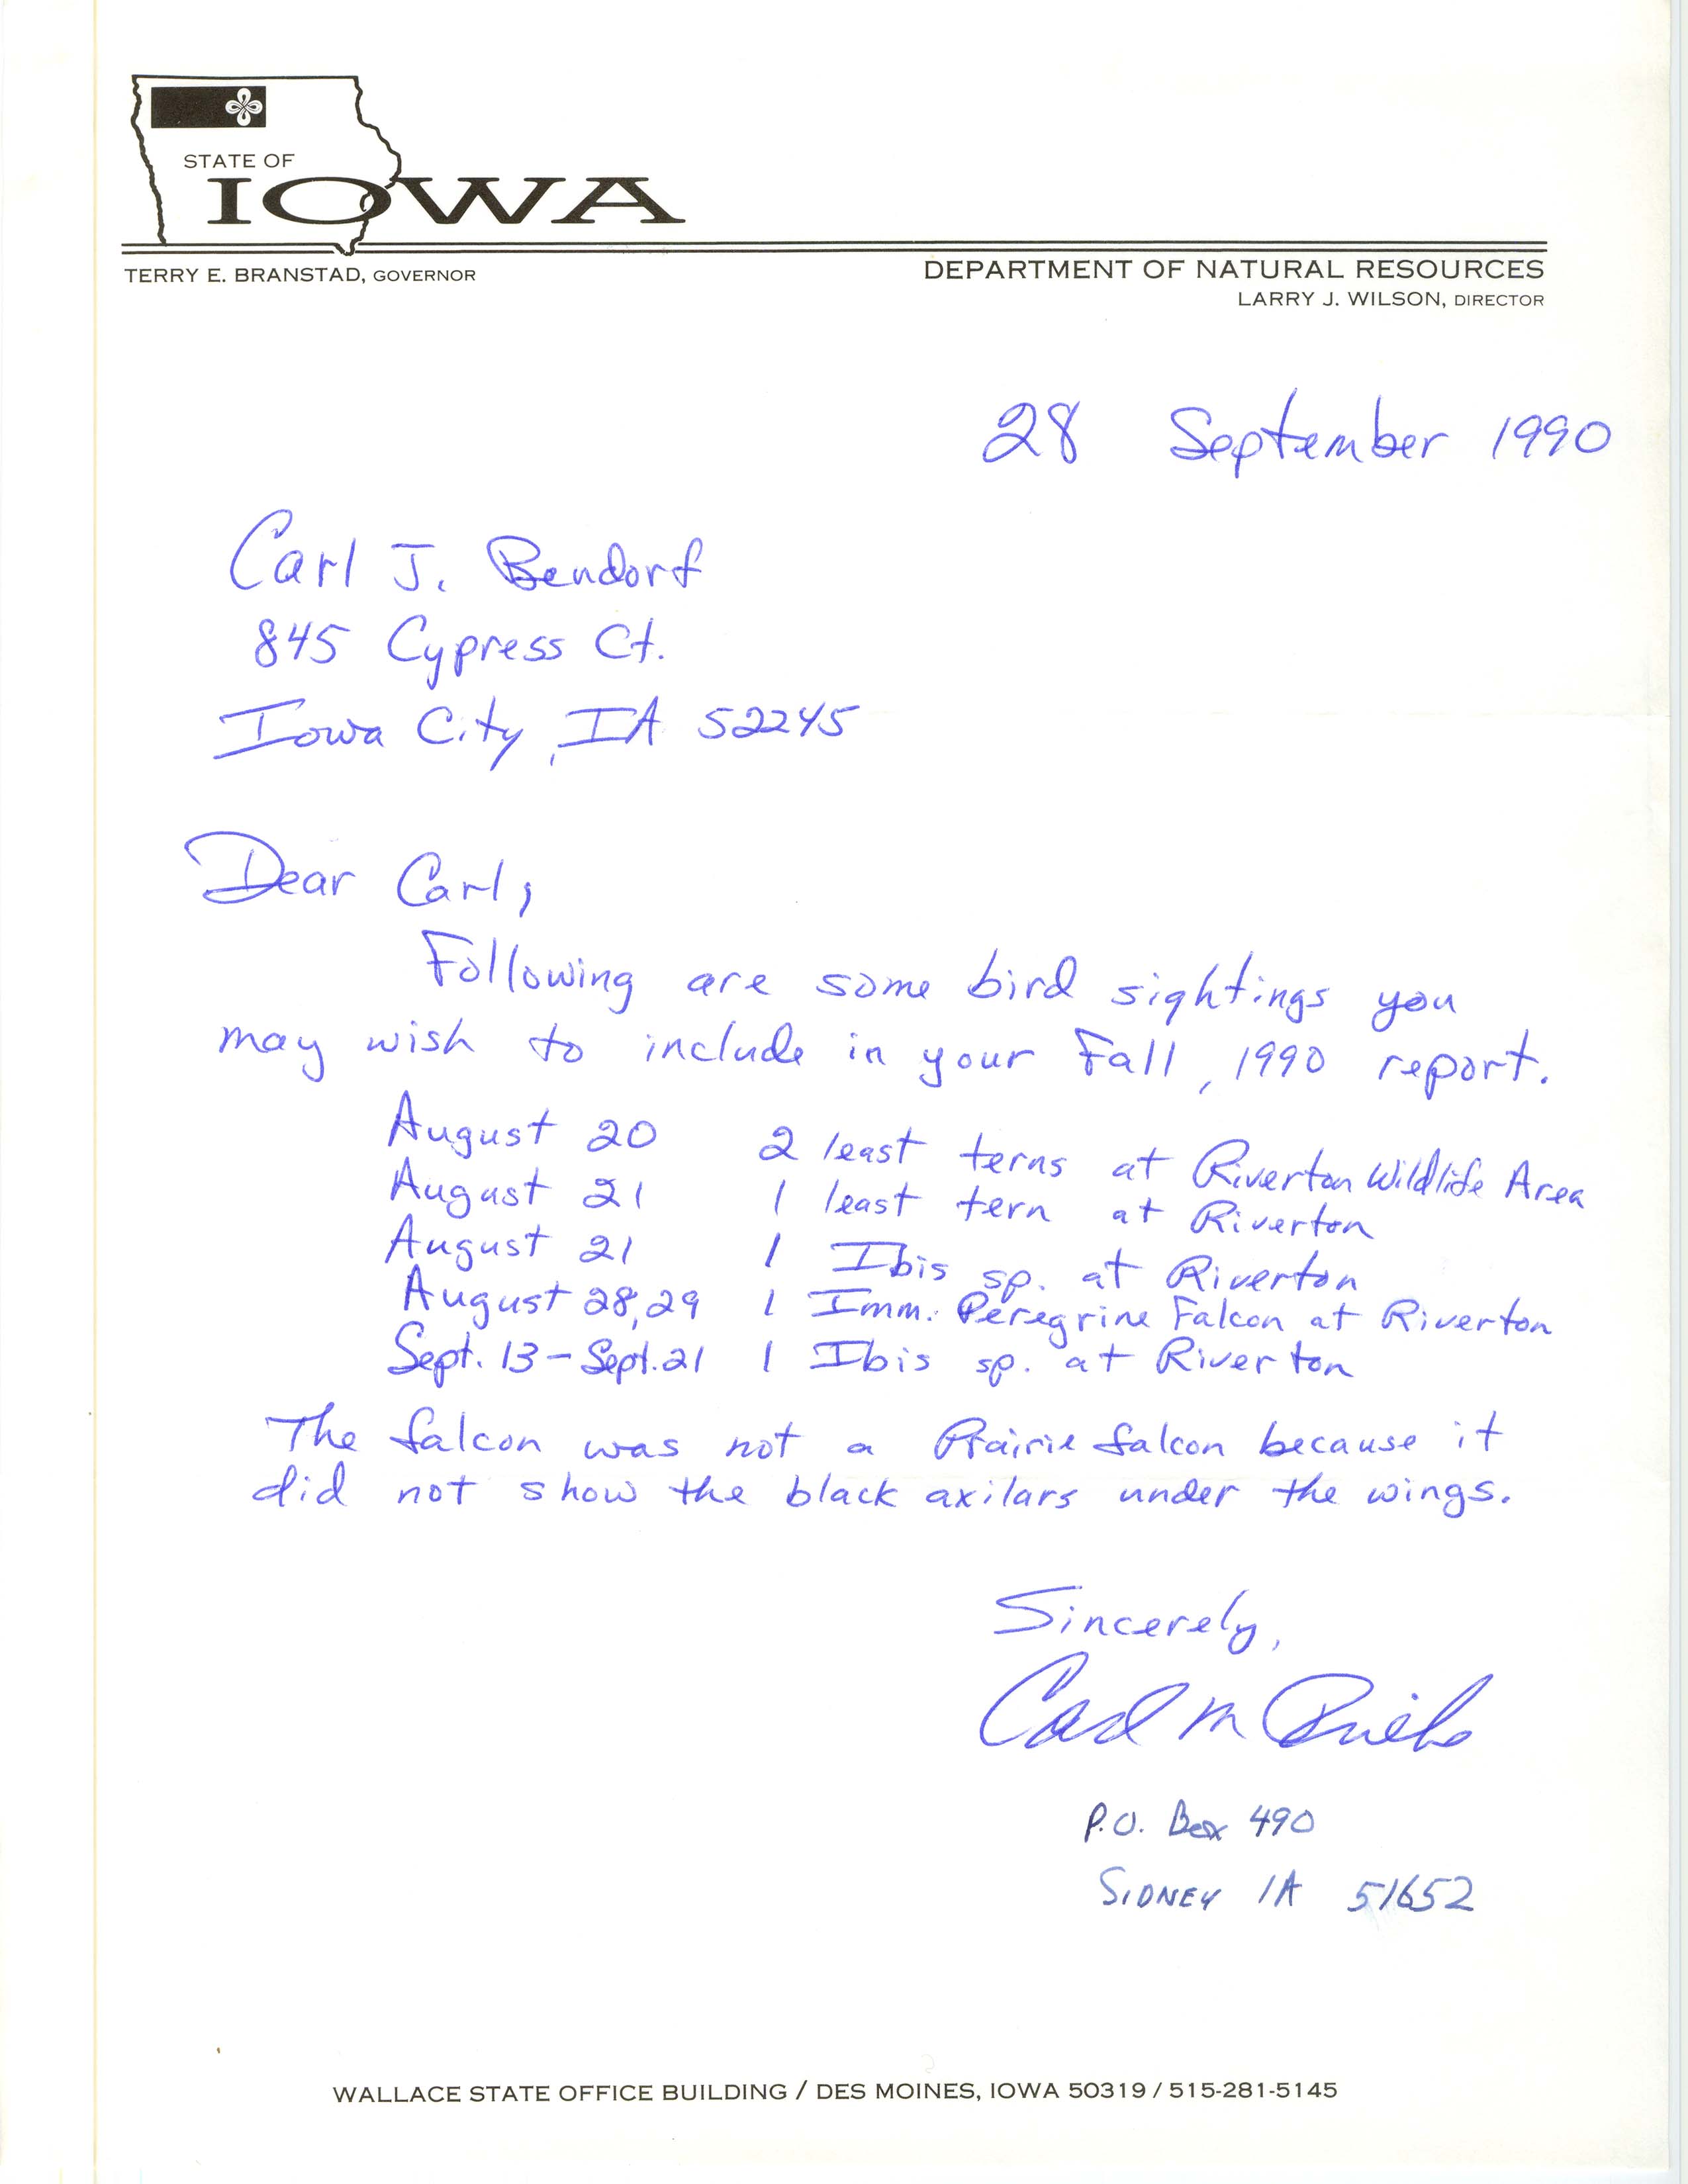 Carl Priebe letter to Carl J. Bendorf regarding bird sightings in the fall 1990, September 28, 1990